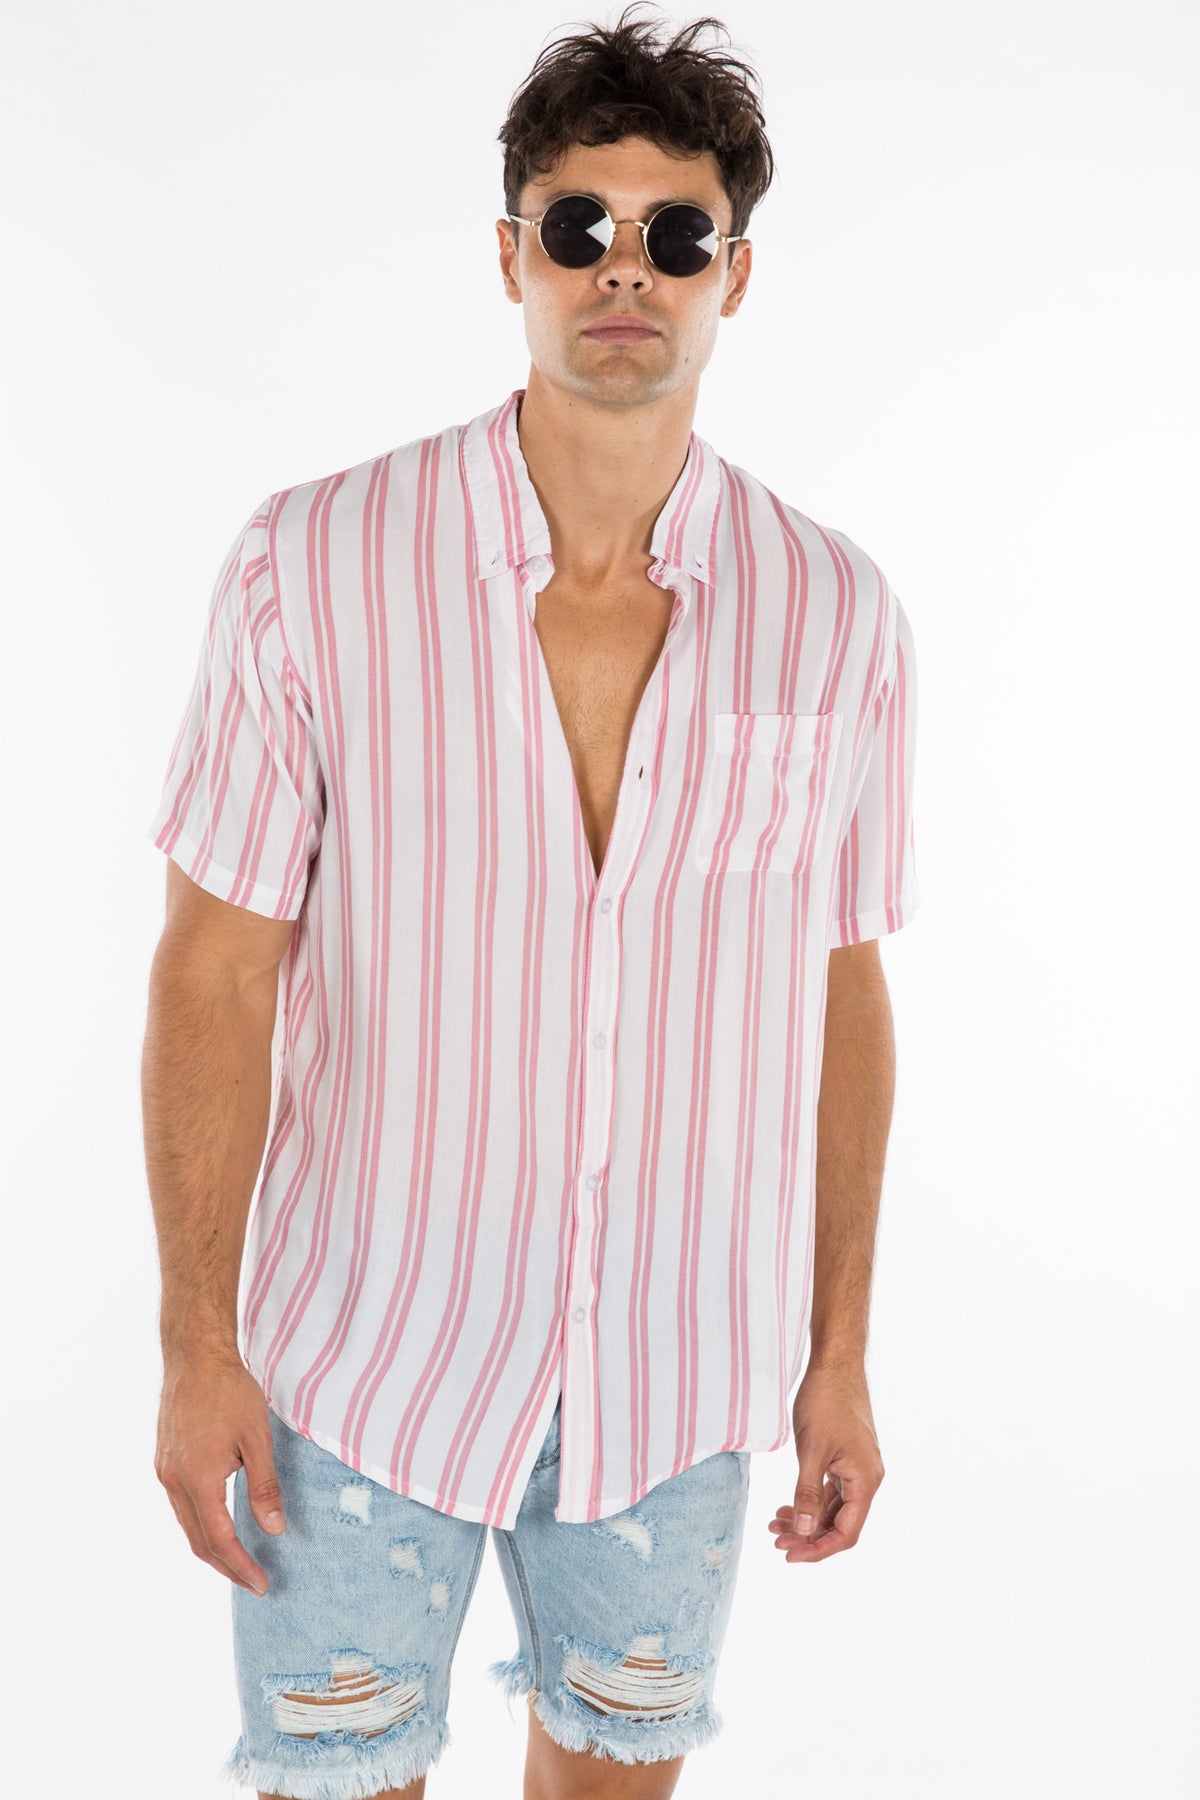 Jack Boating Candy Stripe Shirt